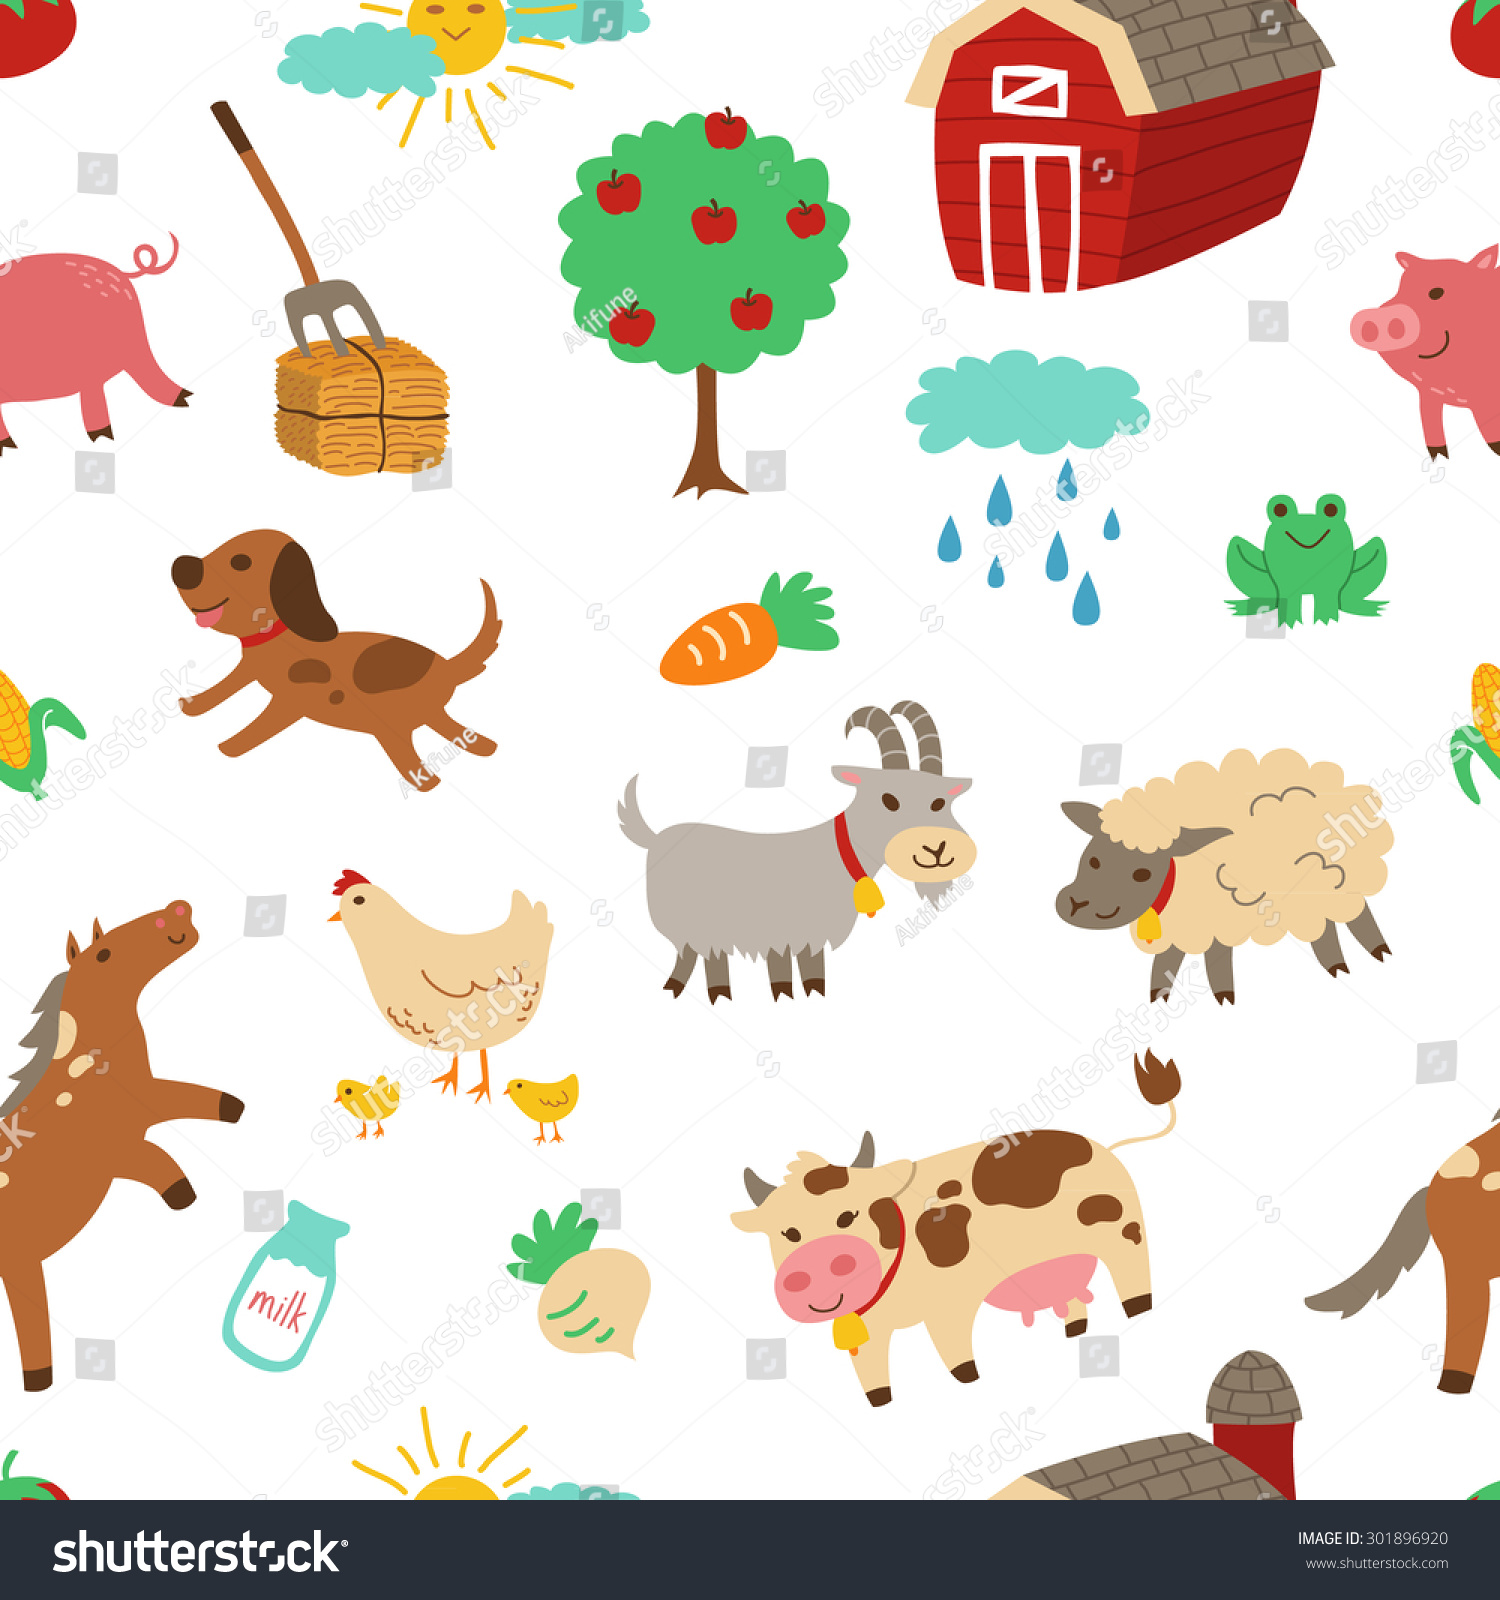 24+] Cartoon Animal Farm Wallpapers - WallpaperSafari